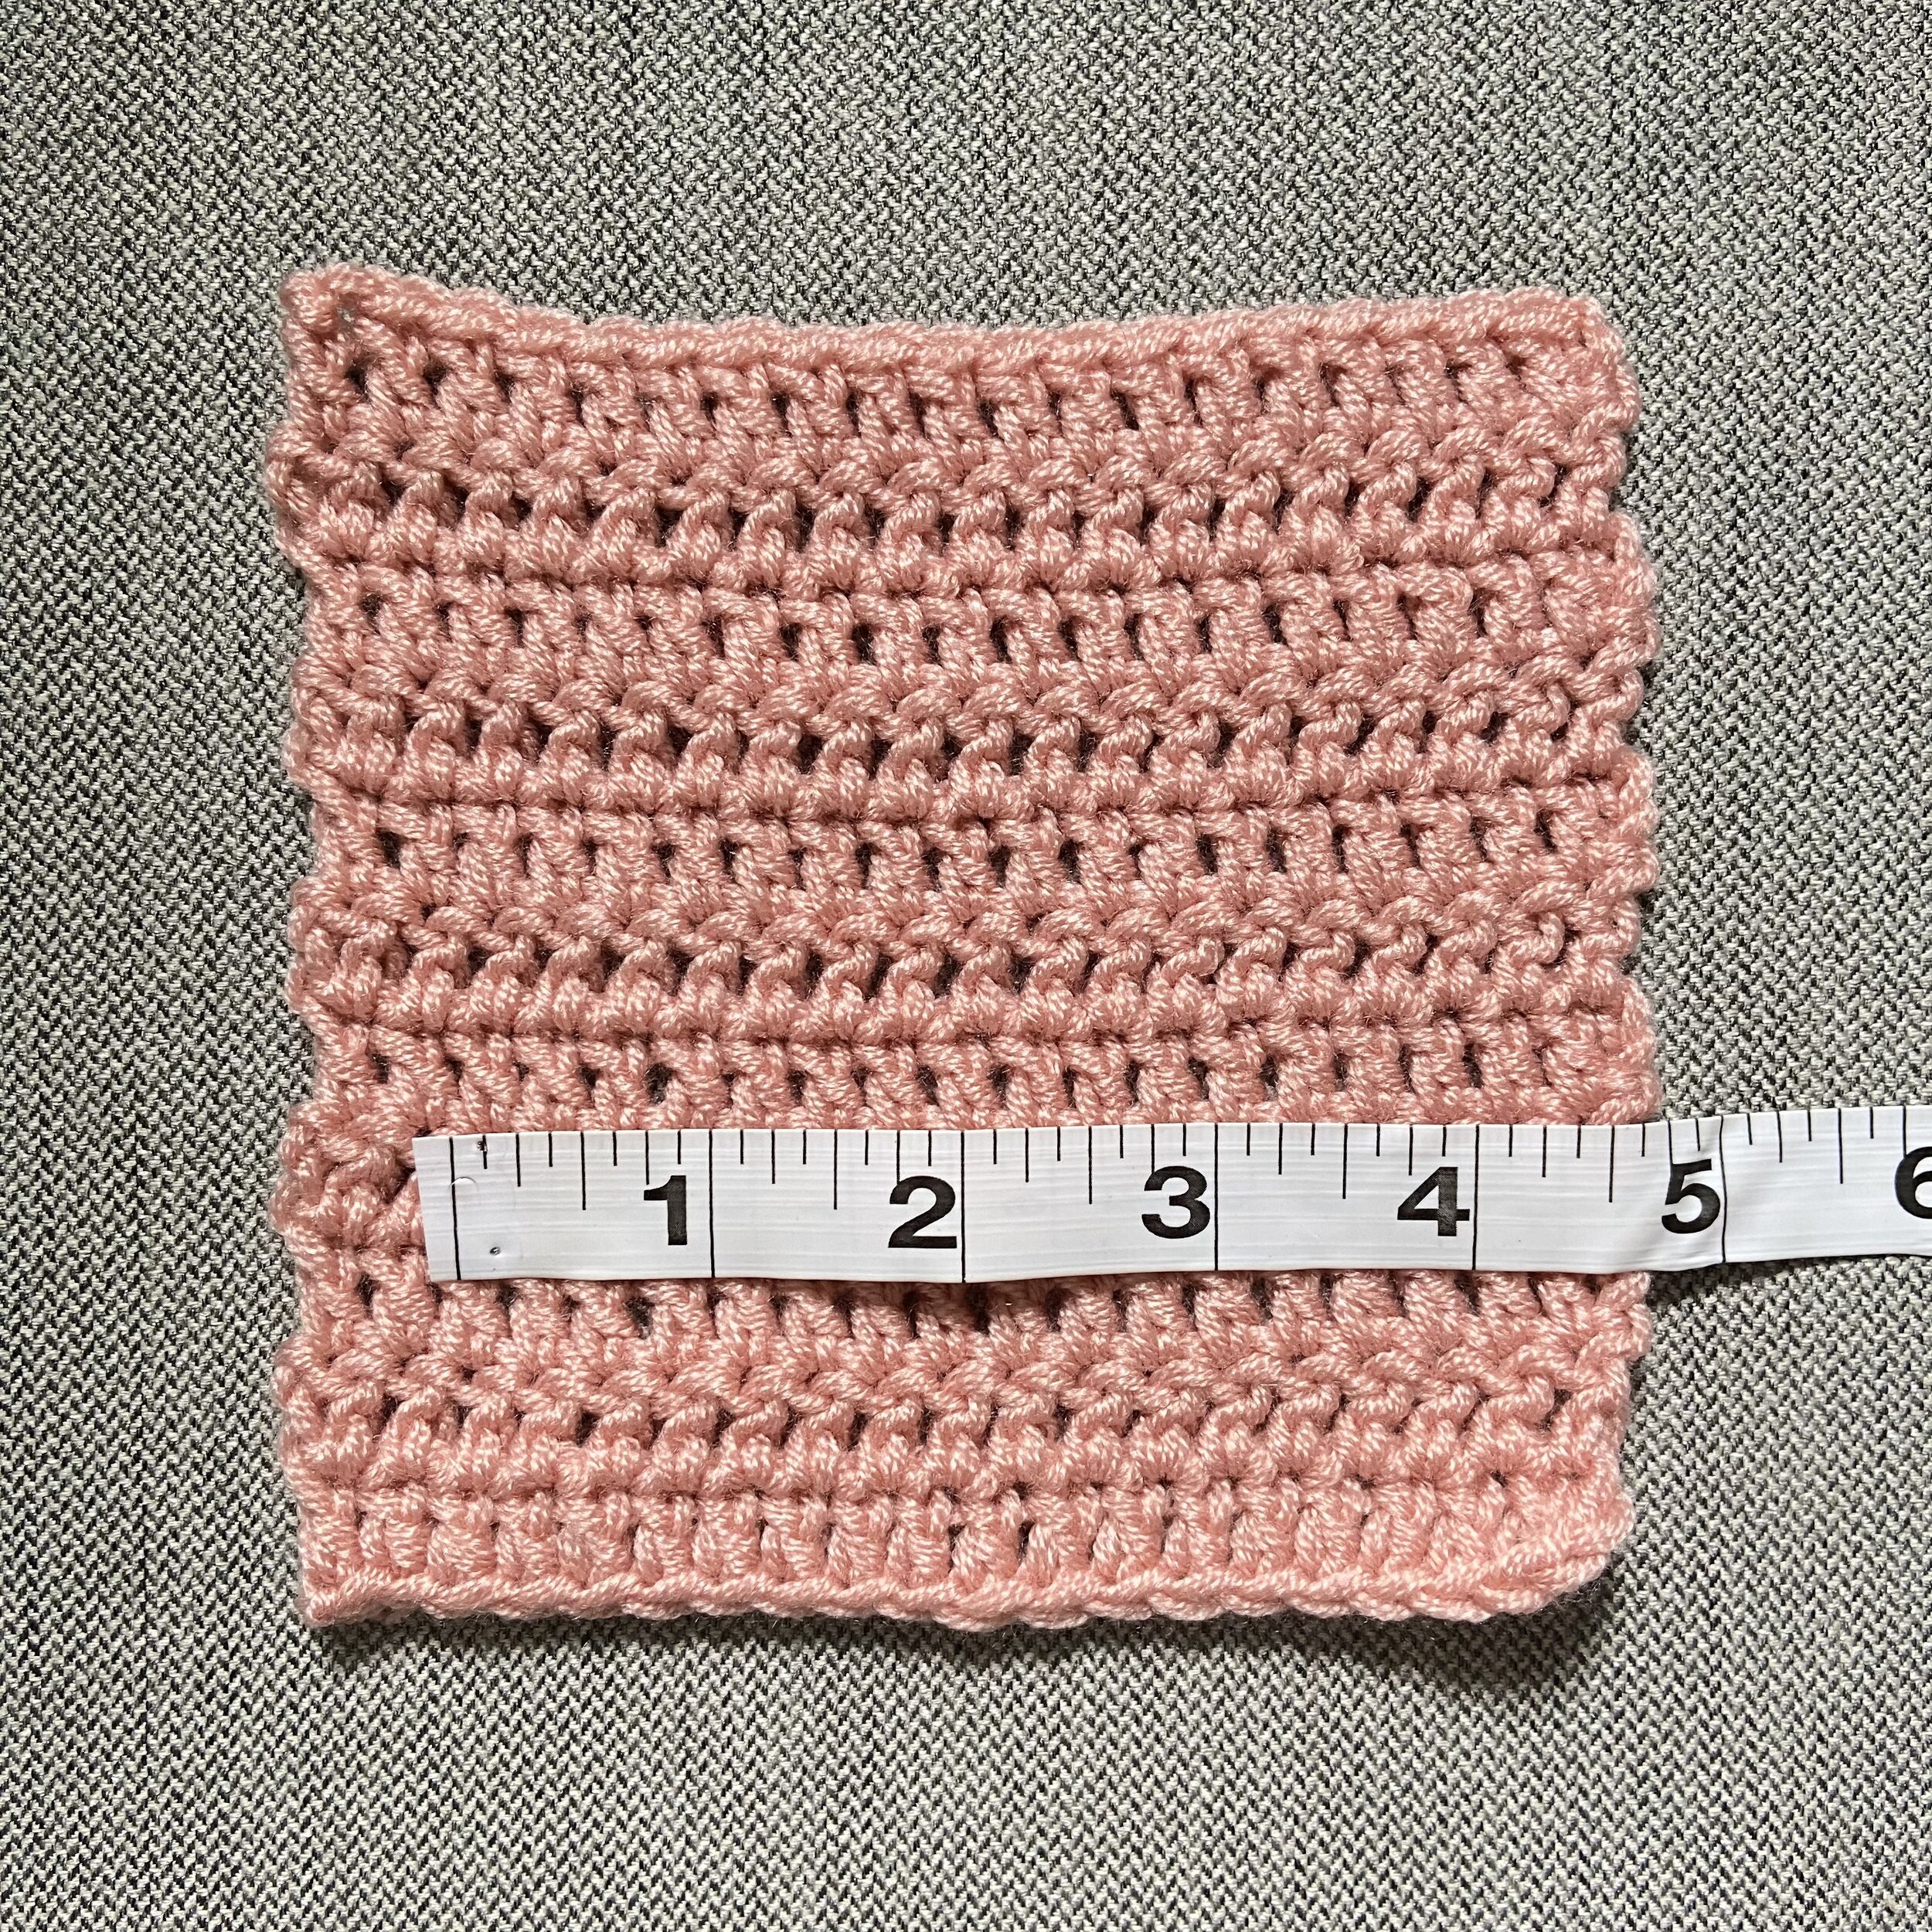 How to Measure Crochet Gauge - Tinderbox.JPG